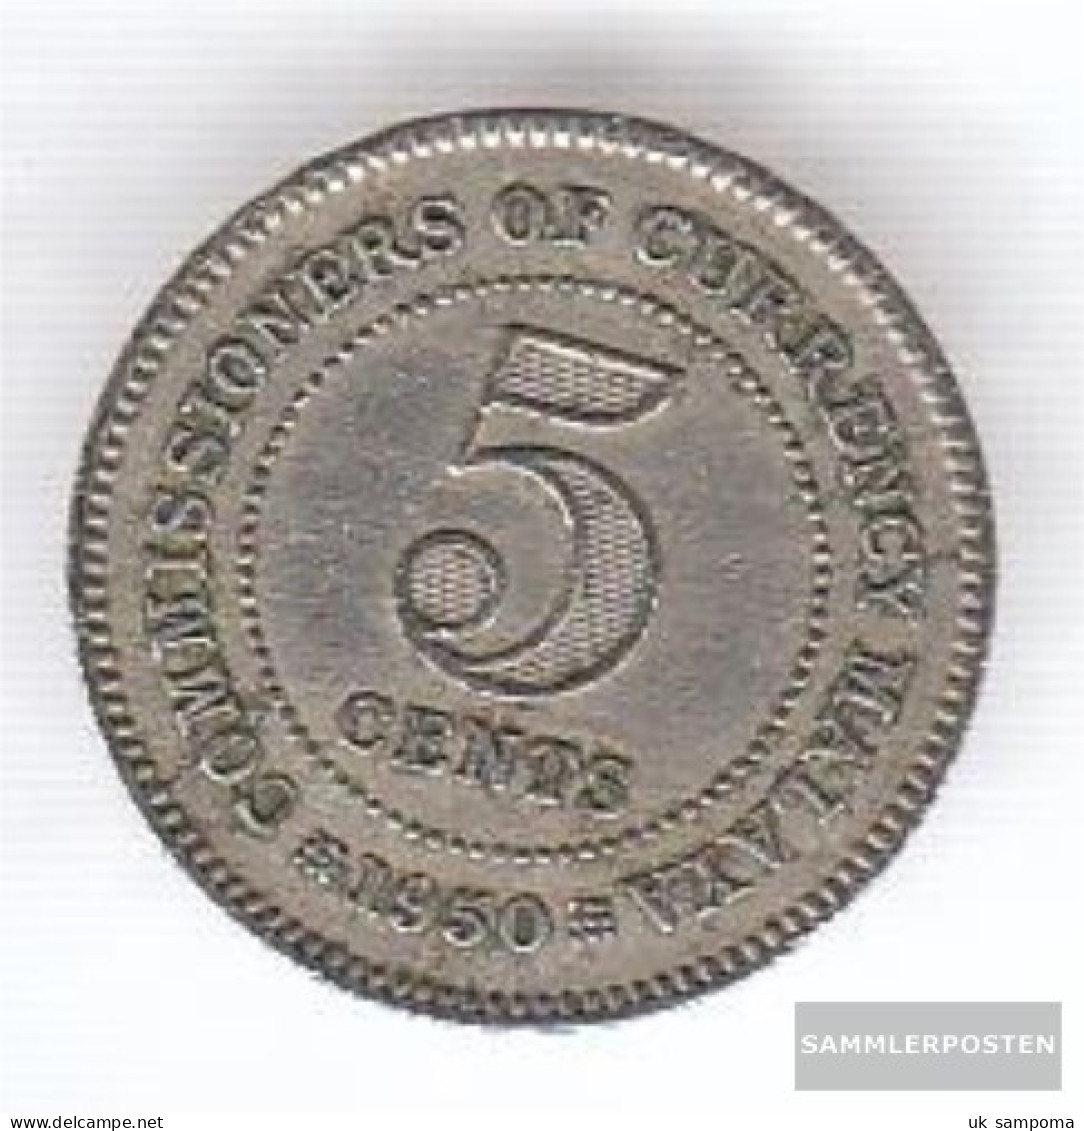 UK Administration Malaya Km.-number.: 7 1950 Very Fine Copper-Nickel Very Fine 1950 5 Cents George VI. - Kolonies